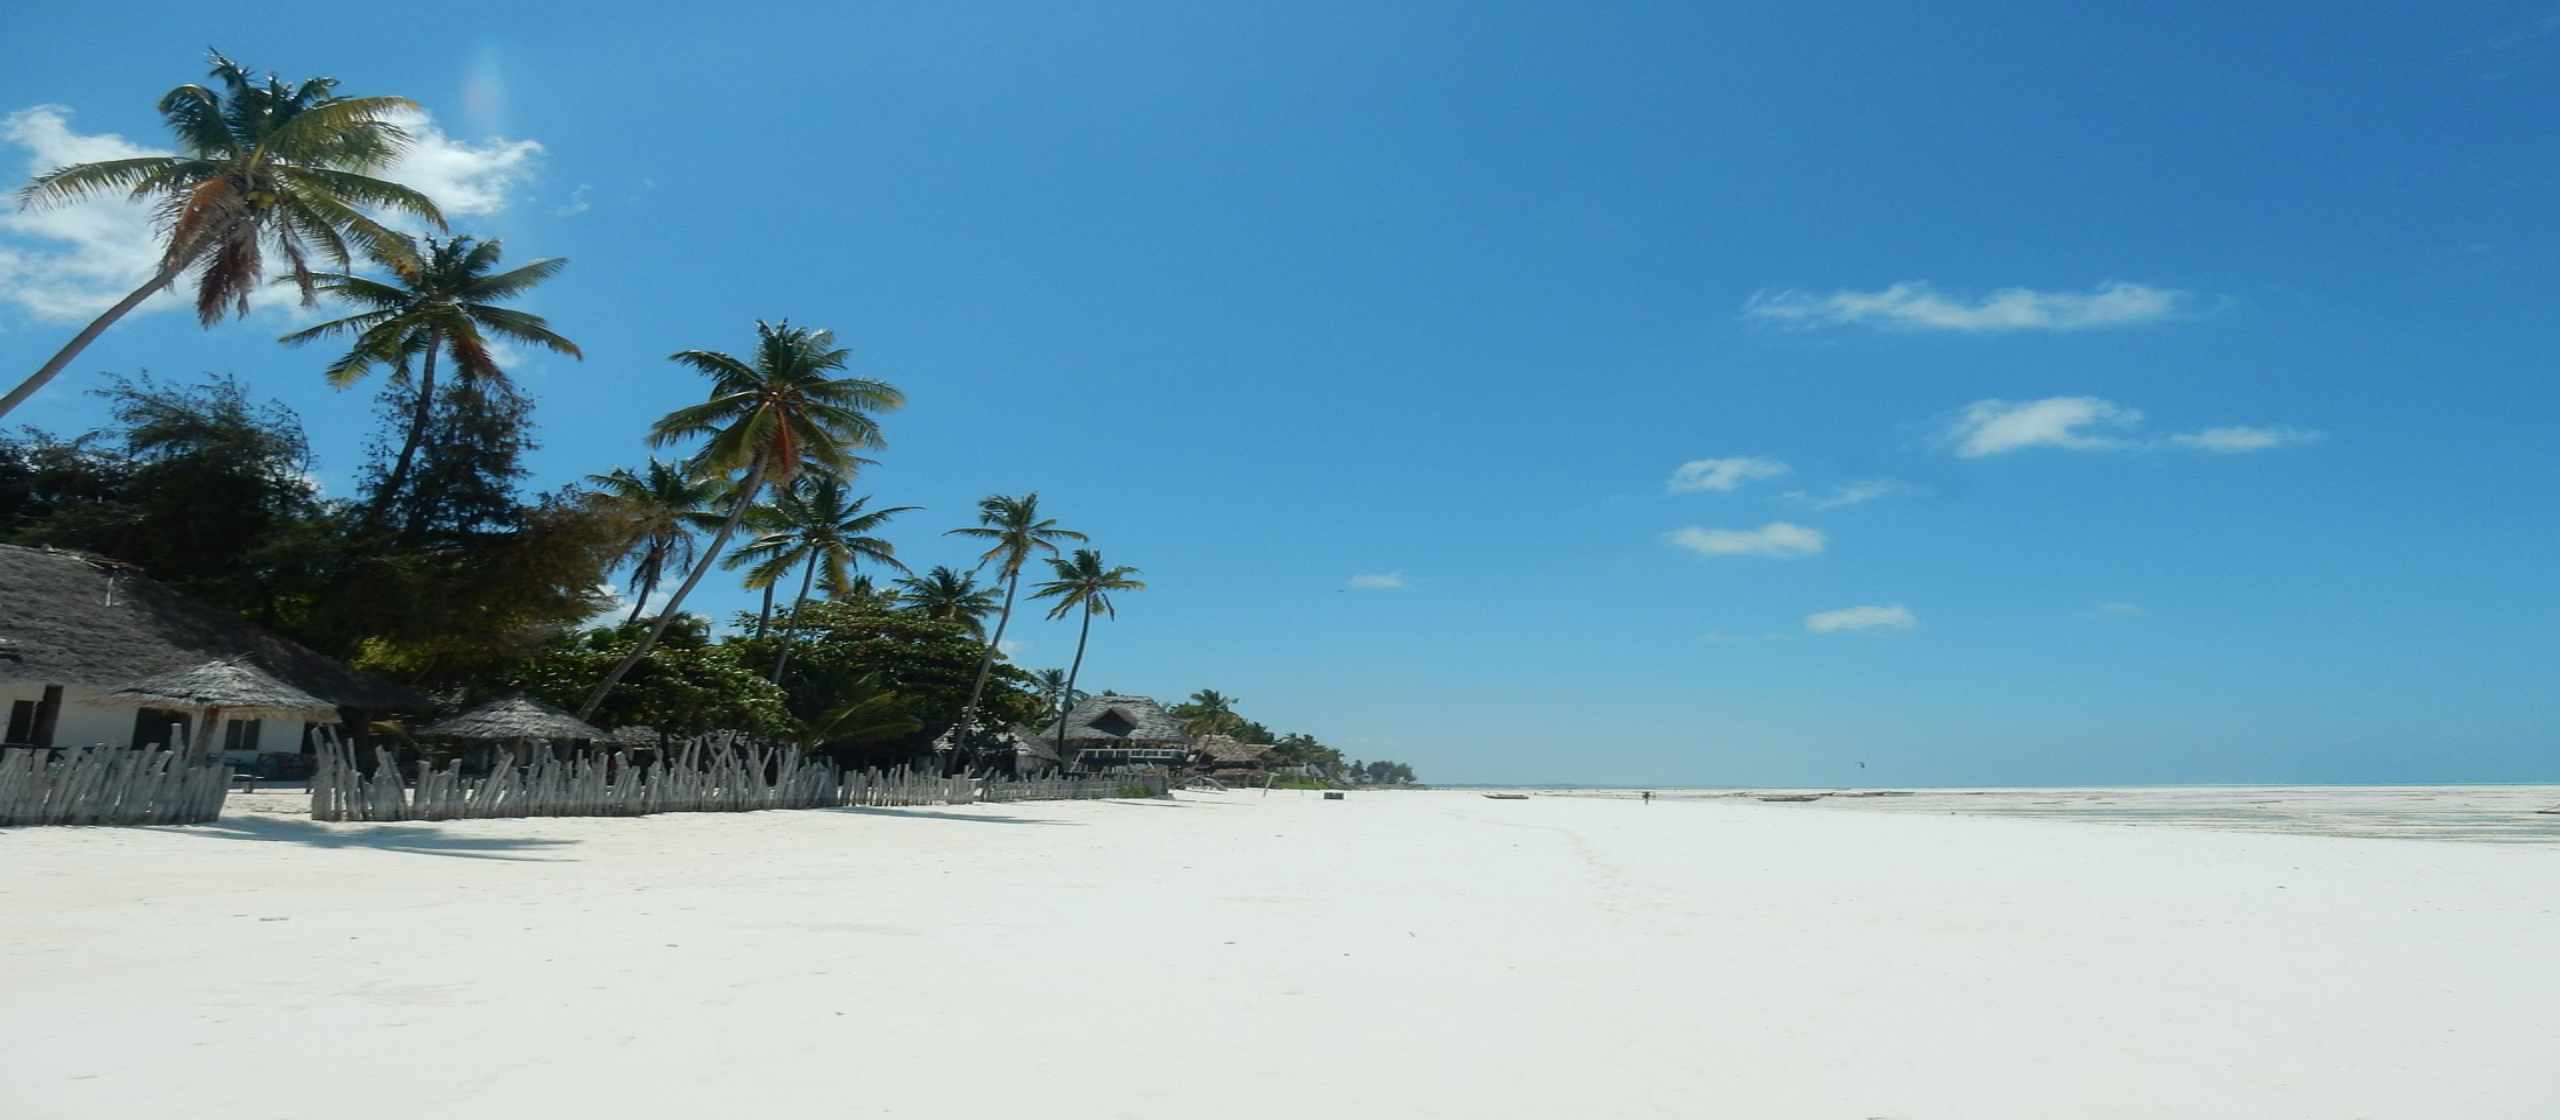 Zanzibar Accommodation